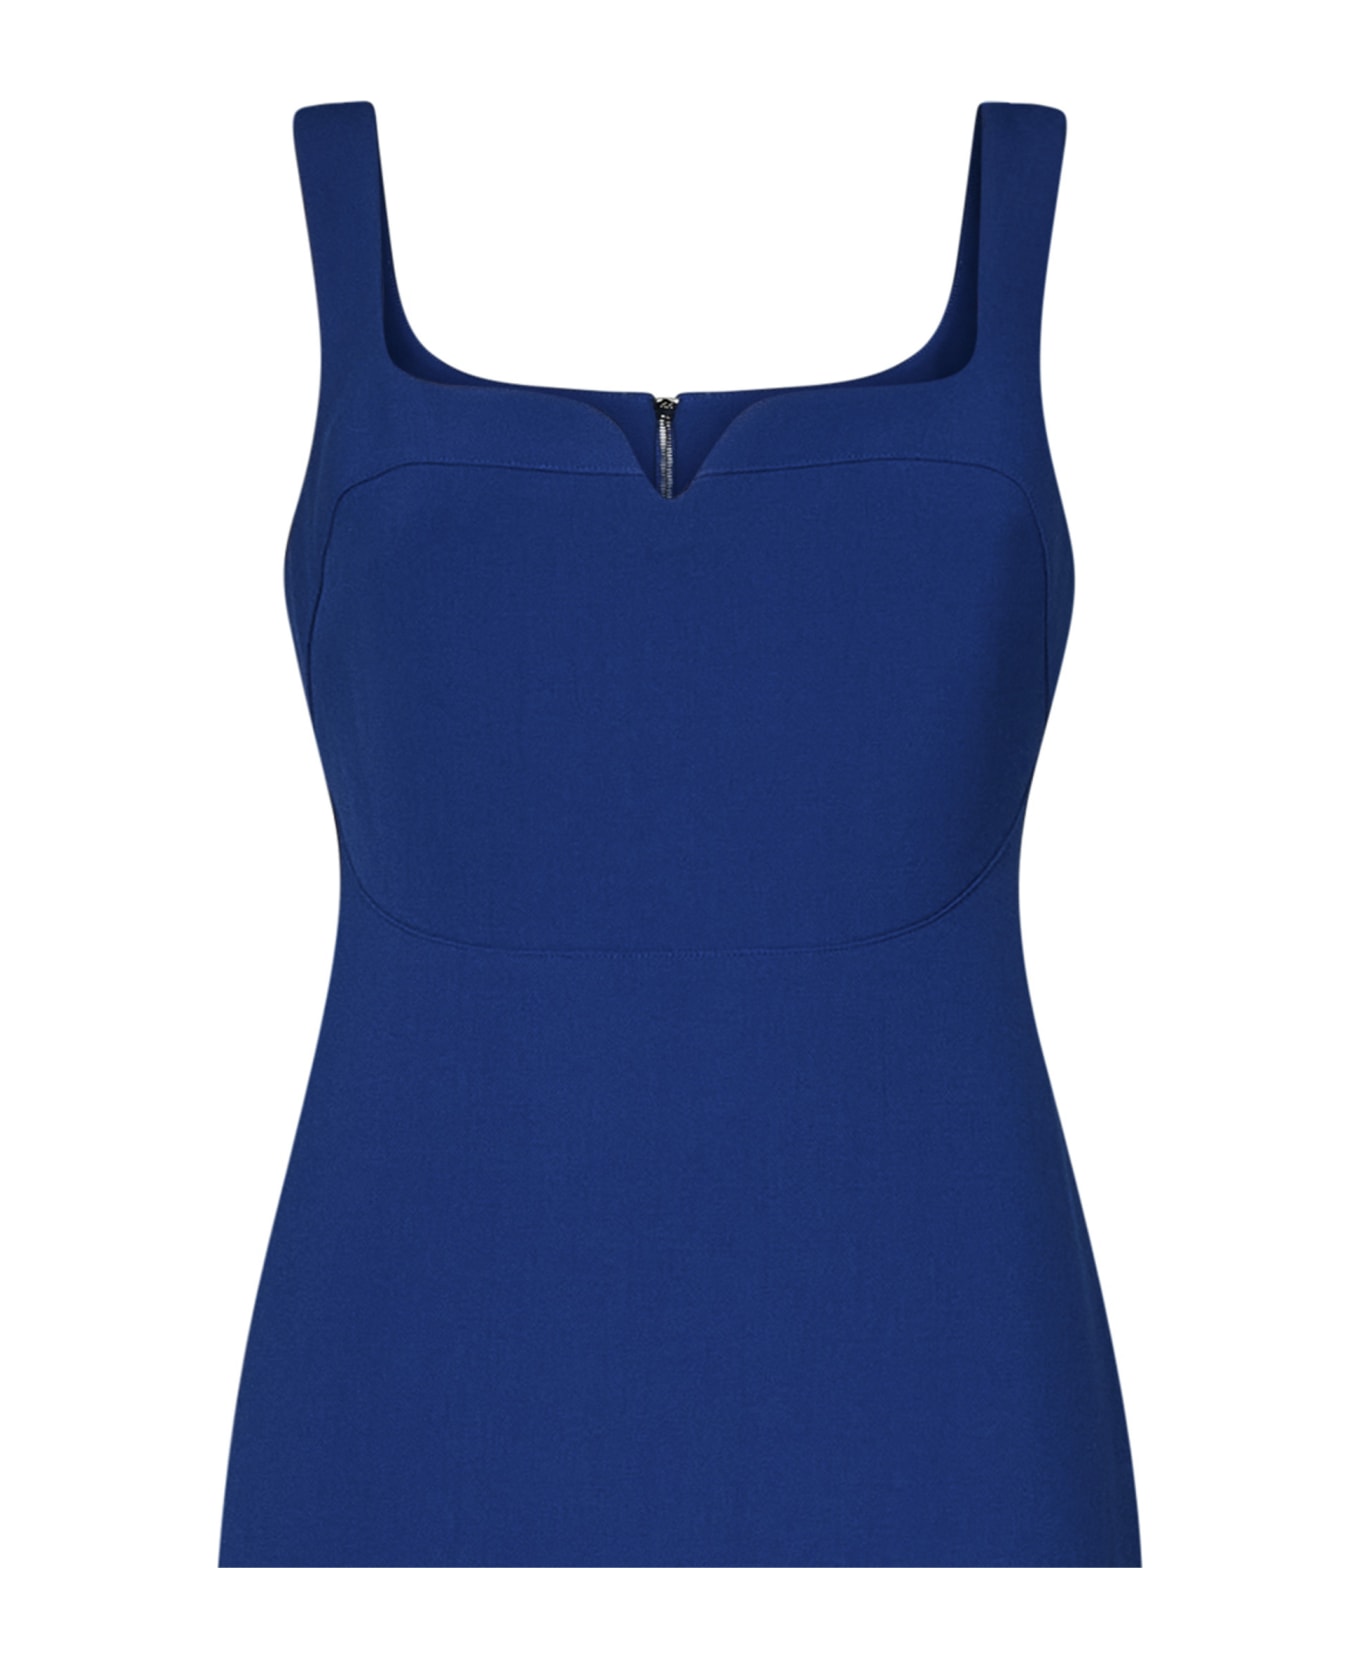 Victoria Beckham Sleeveless Fitted T-shirt Dress Midi Dress - Blue